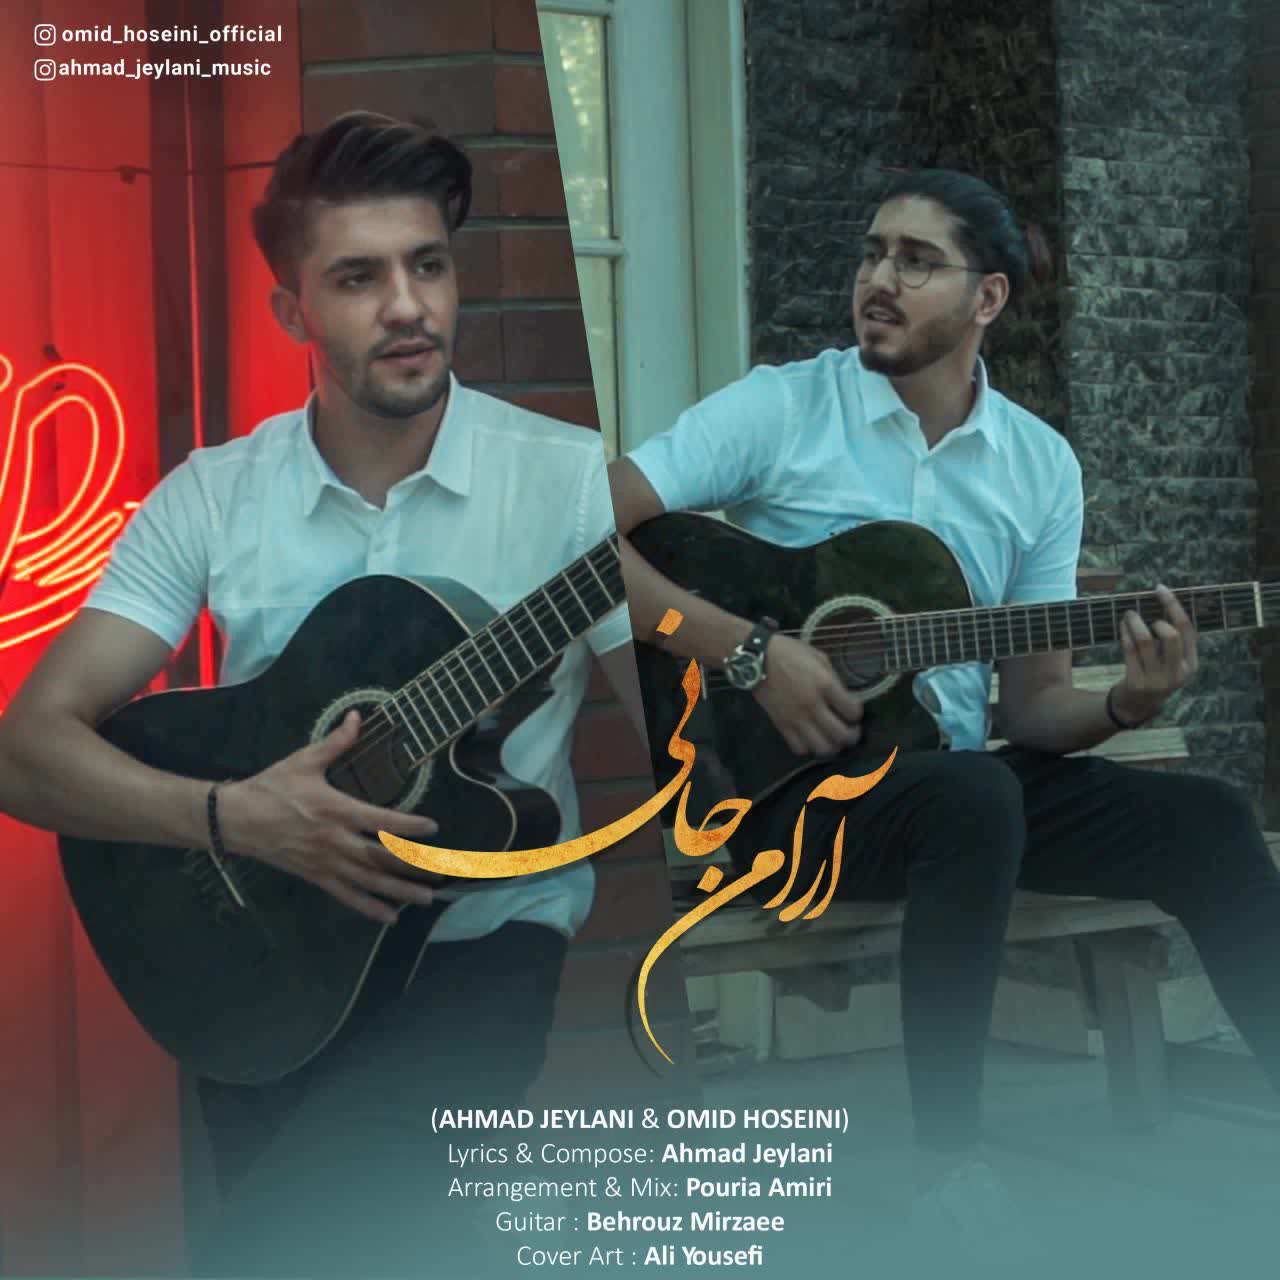 Ahmad Jeylani & Omid Hoseini – Aram Jani | آهنگ آرام جانی از احمد جیلانی و امید حسینی